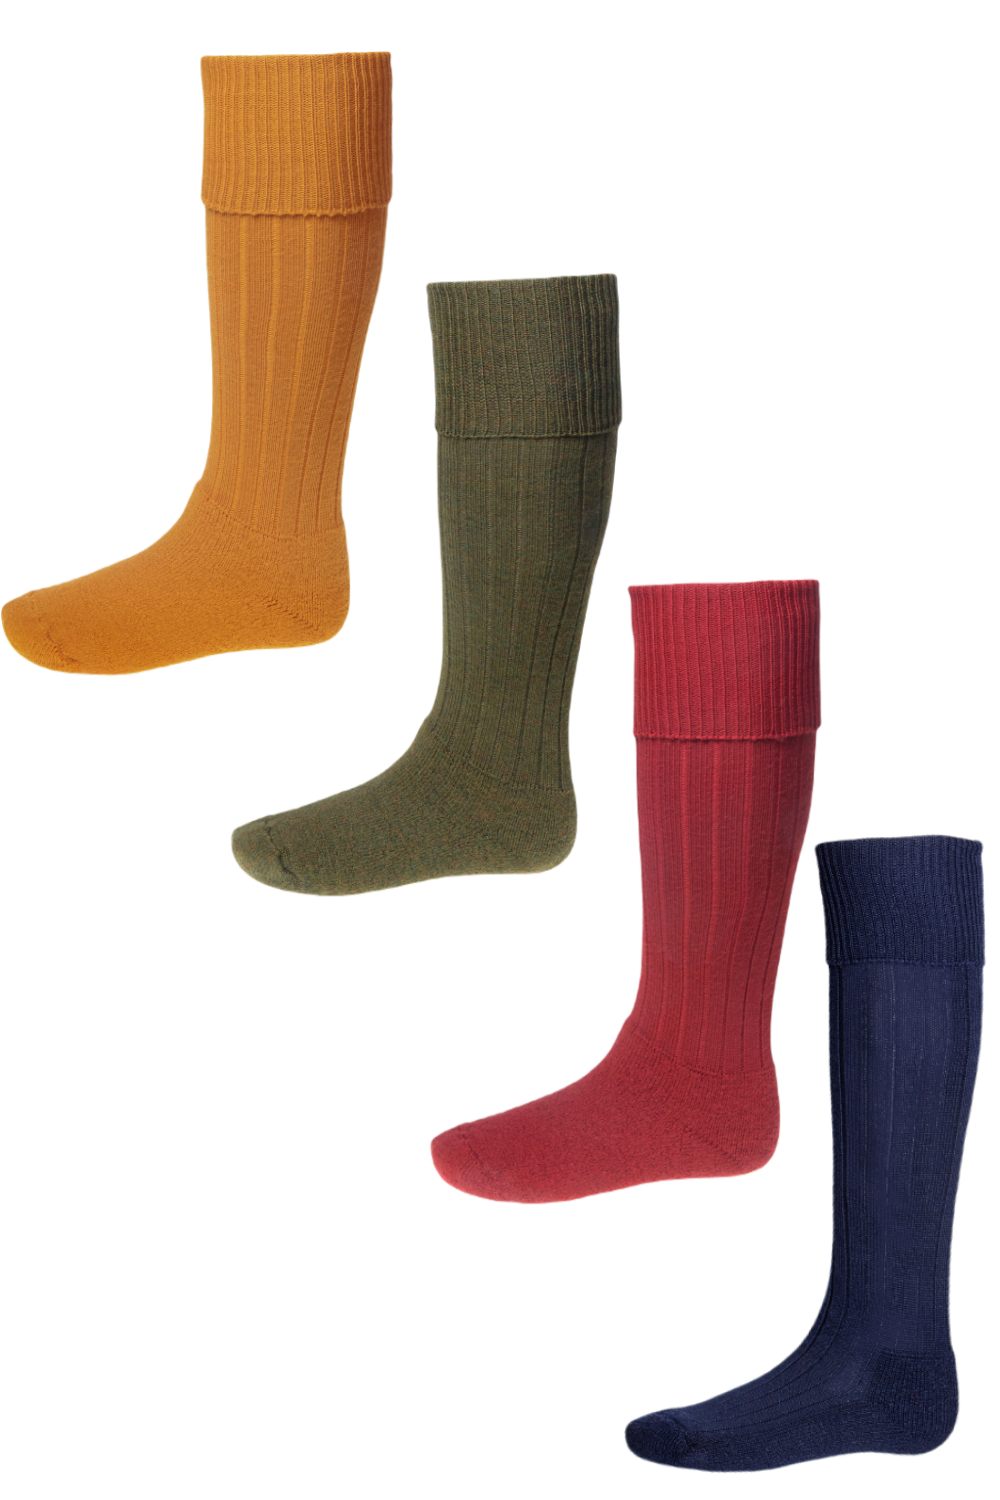 House Of Cheviot Scarba Socks In Available in: Ochre, Bracken, Brick Red, Navy